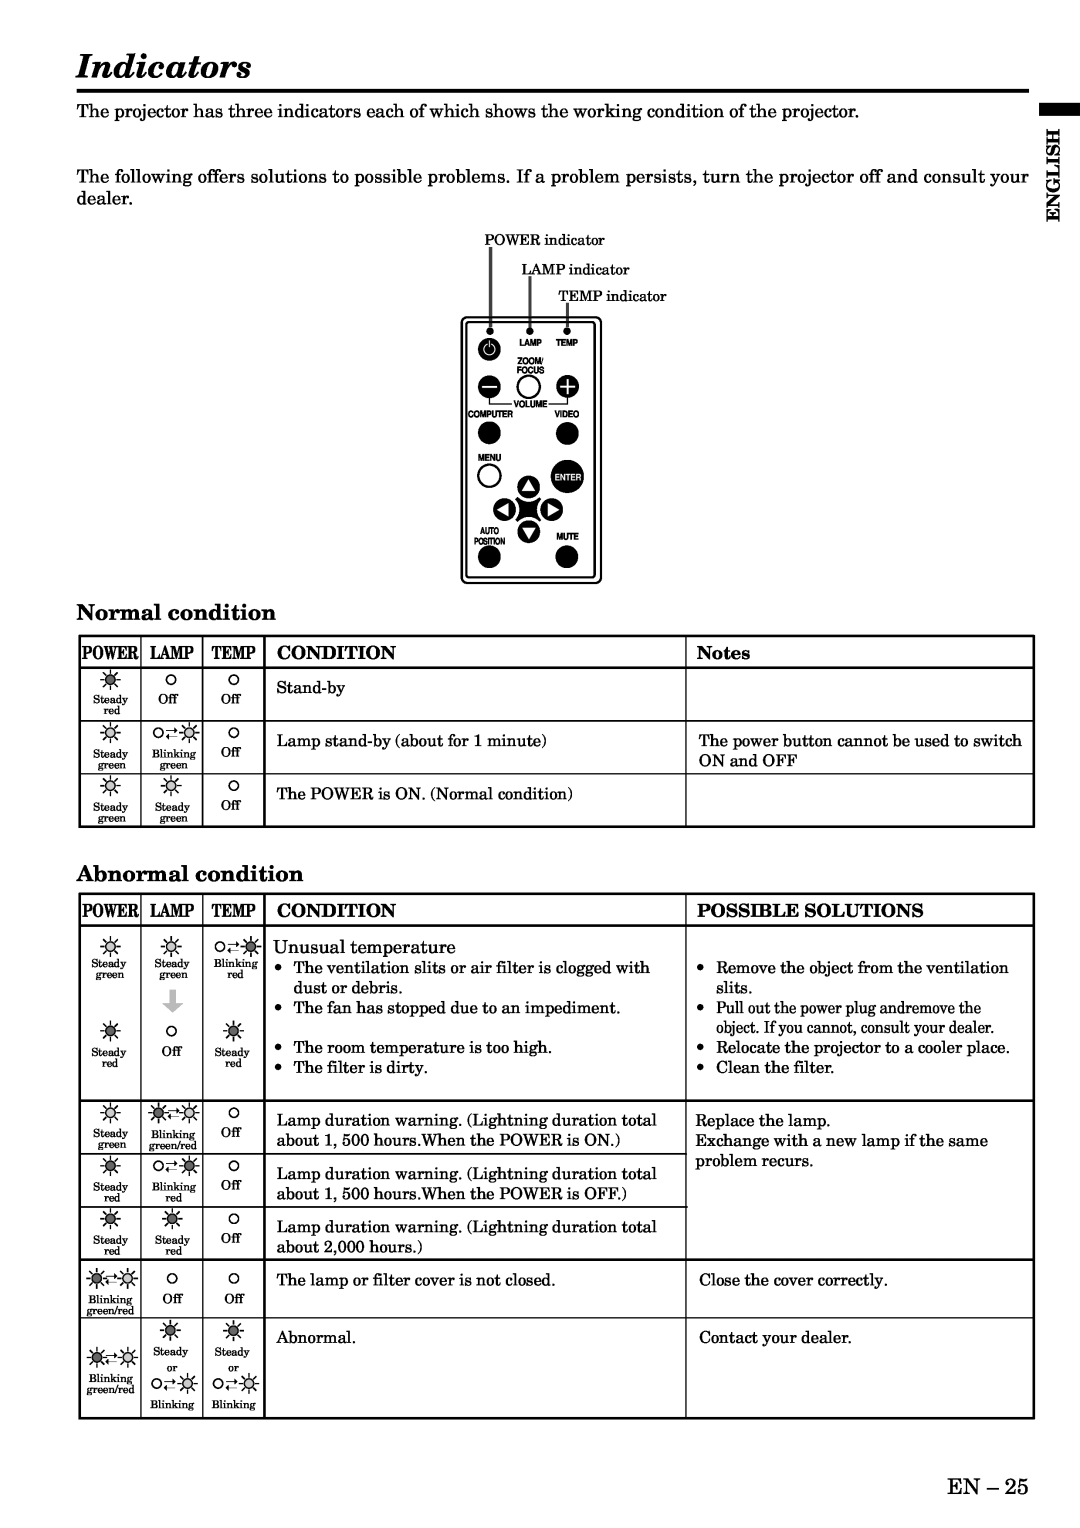 Mitsubishi Electronics S290U user manual Indicators, Normal condition, Abnormal condition 